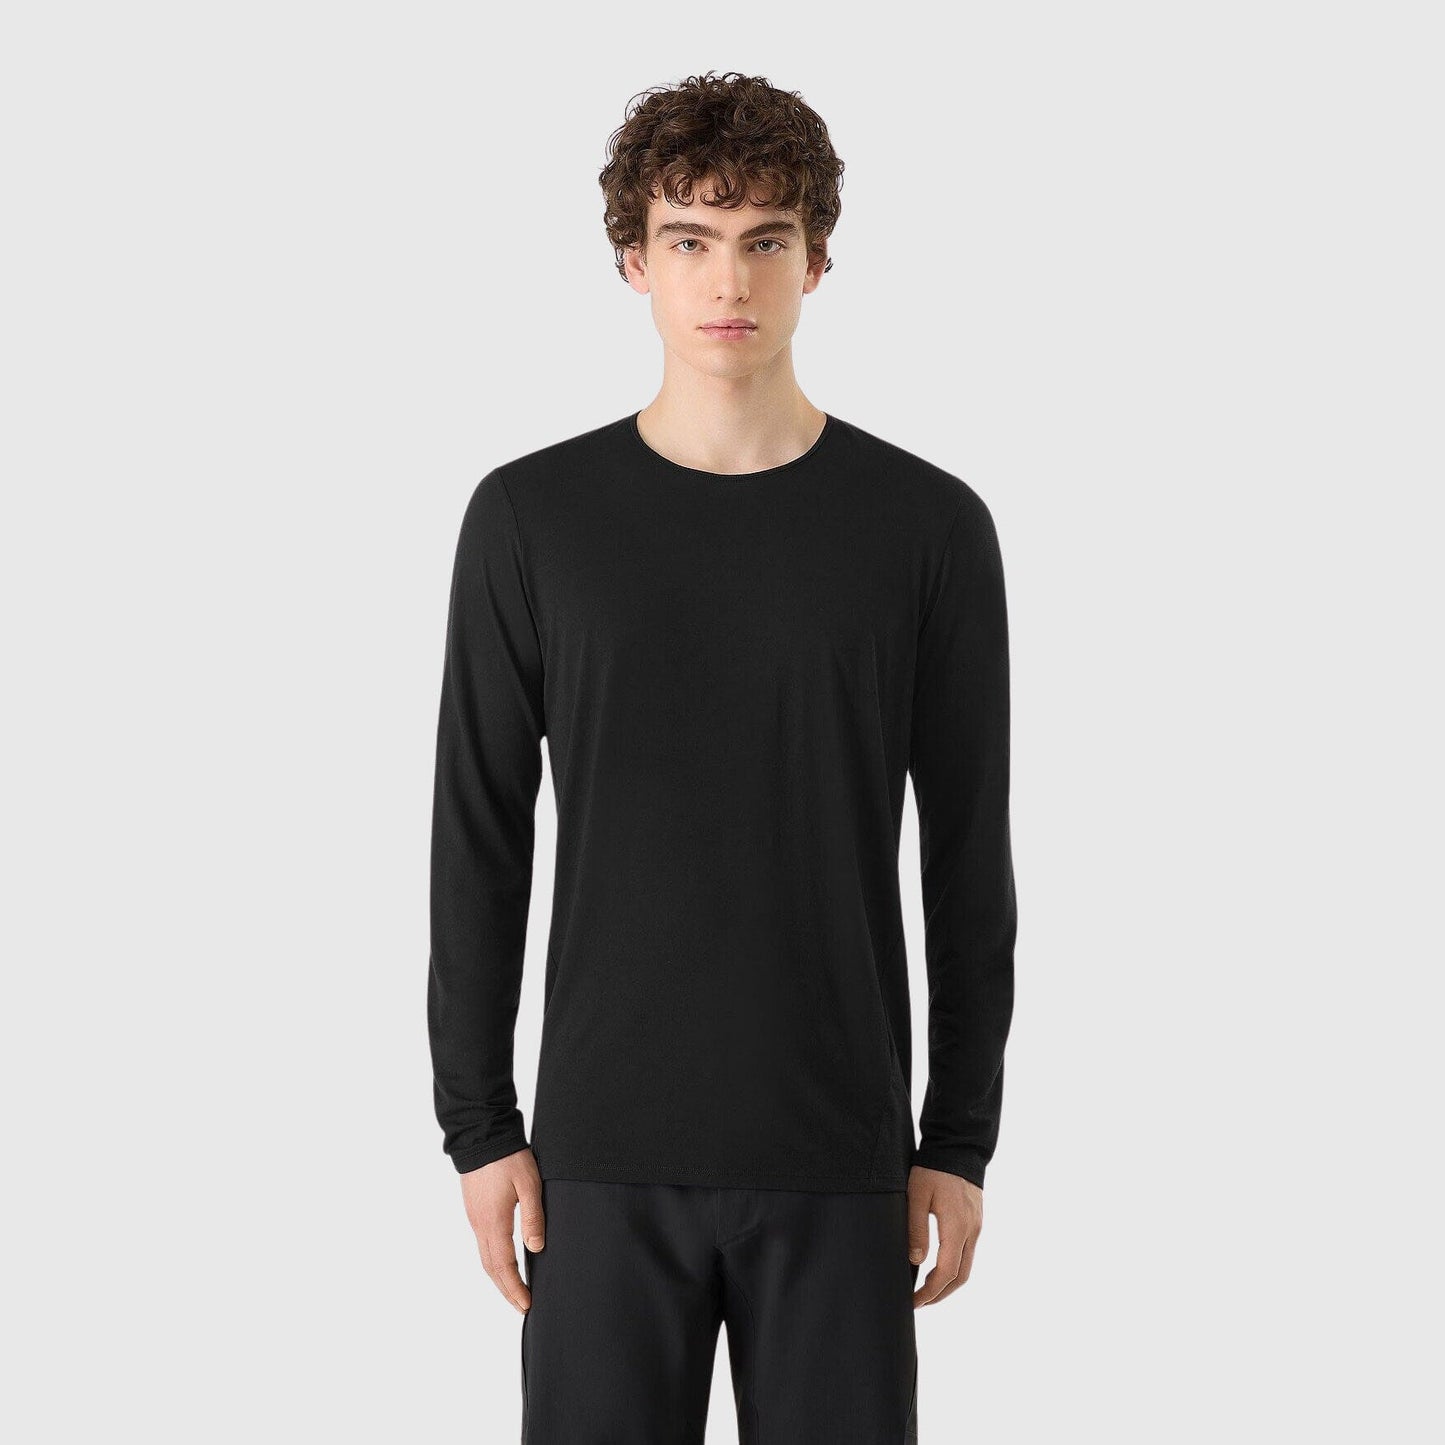 Veilance Frame Longsleeve Shirt - Black Longsleeve Veilance 